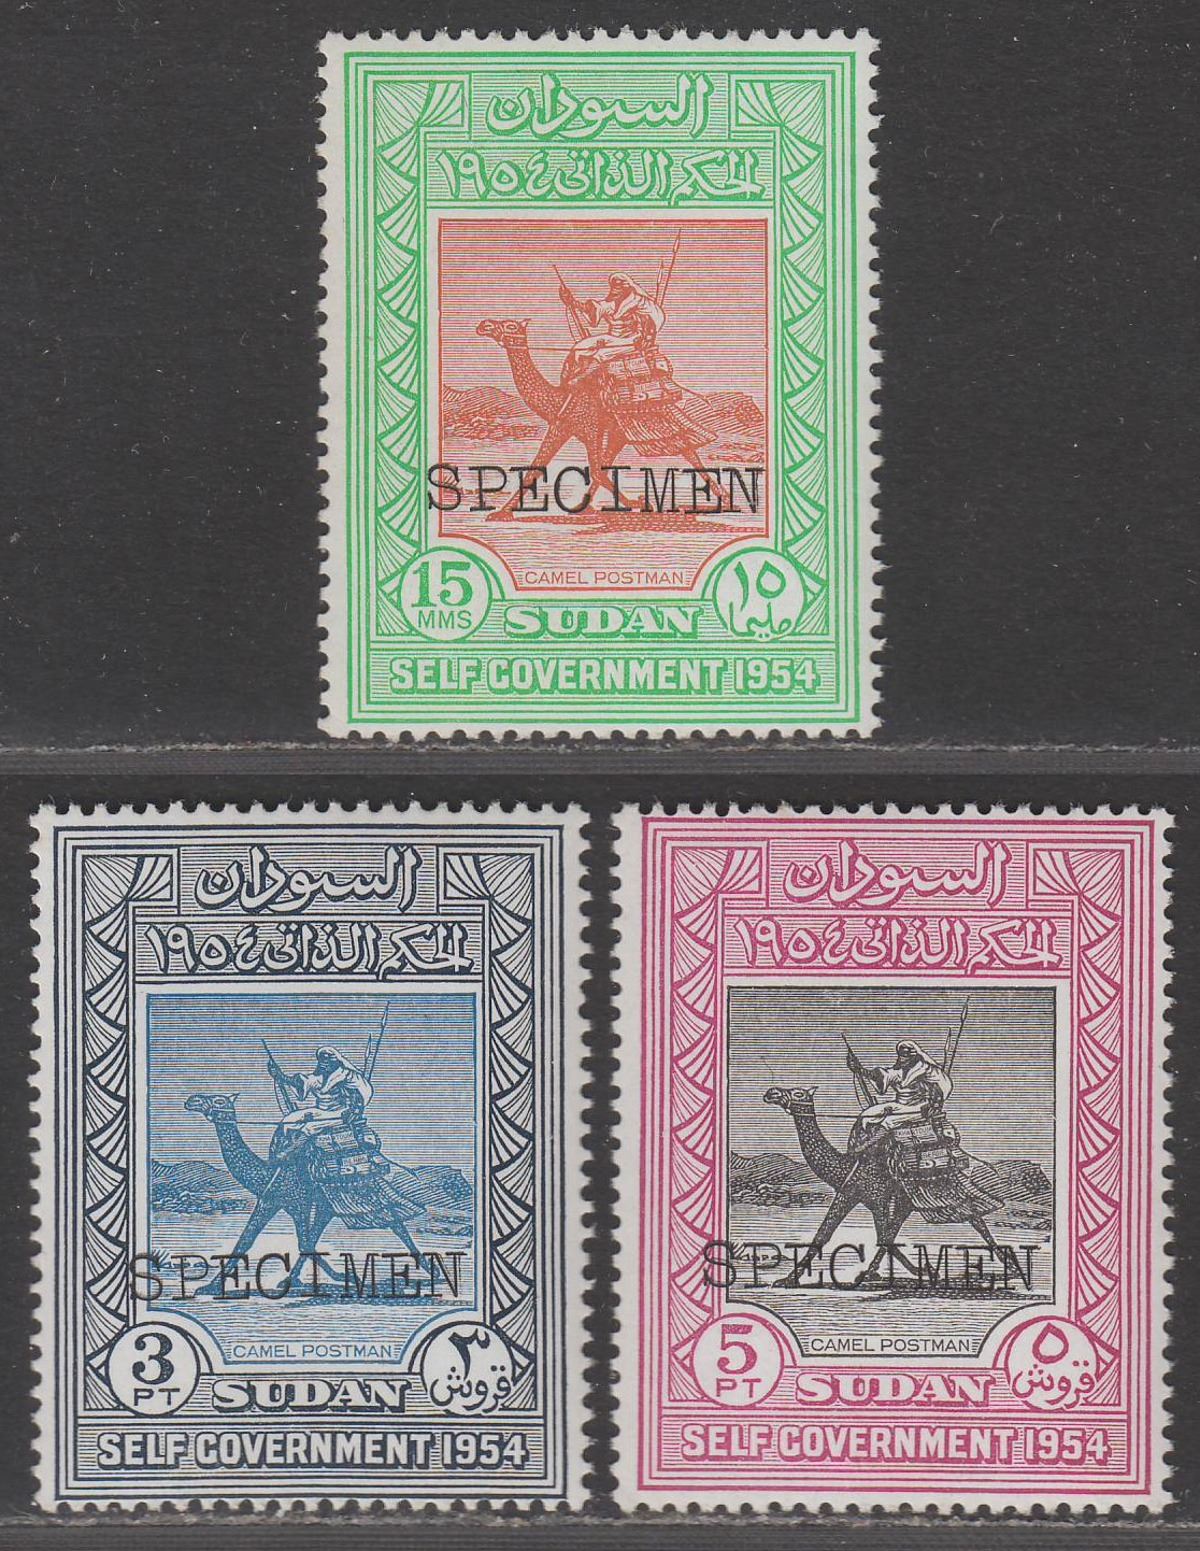 Sudan 1954 Self-Government SPECIMEN Overprint Set Mint SG140s-142s